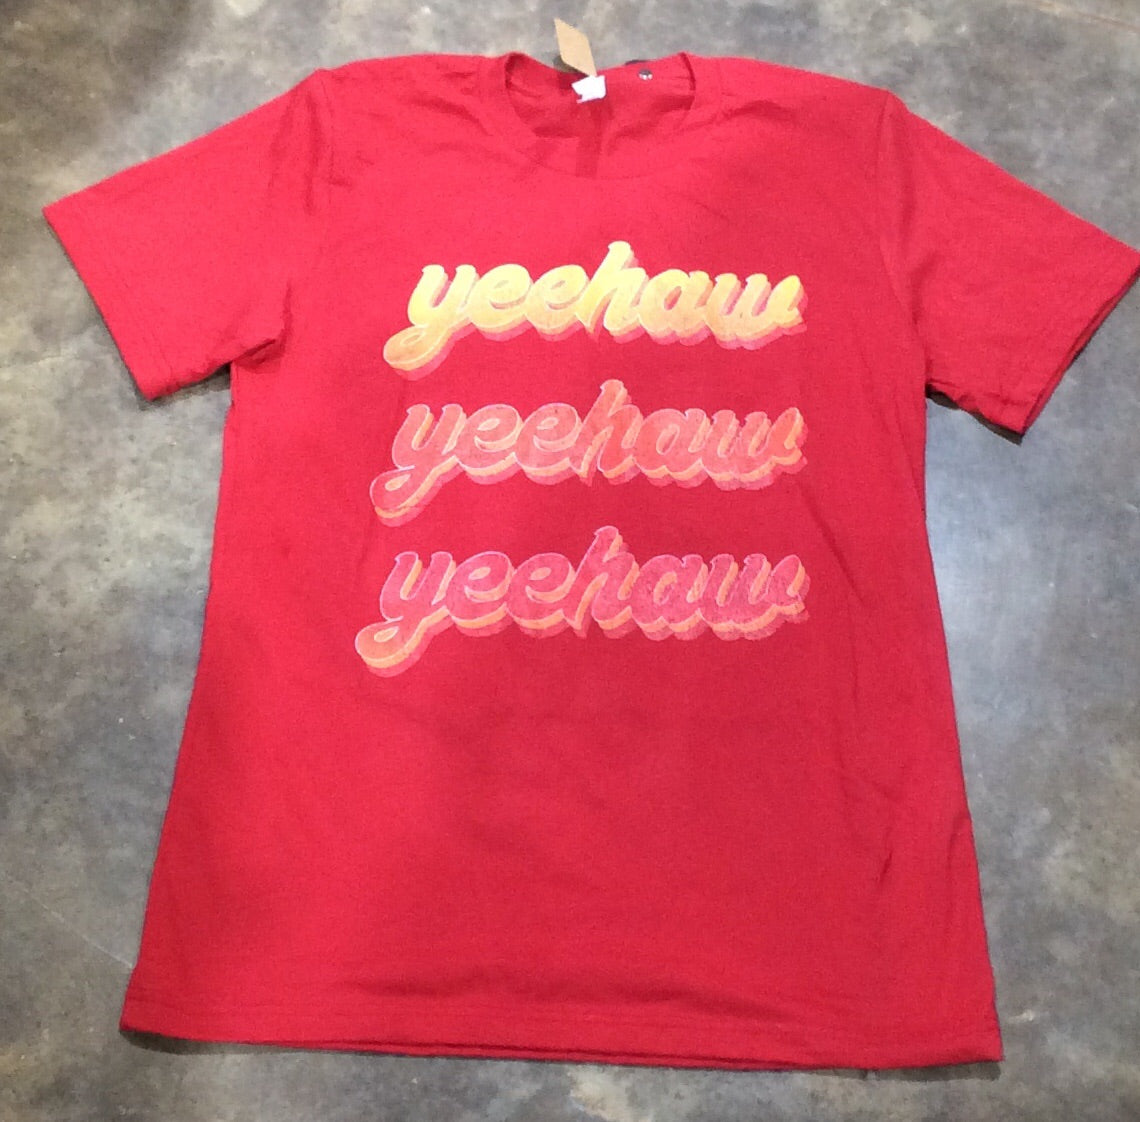 Yee Haw Tee Shirt in Red